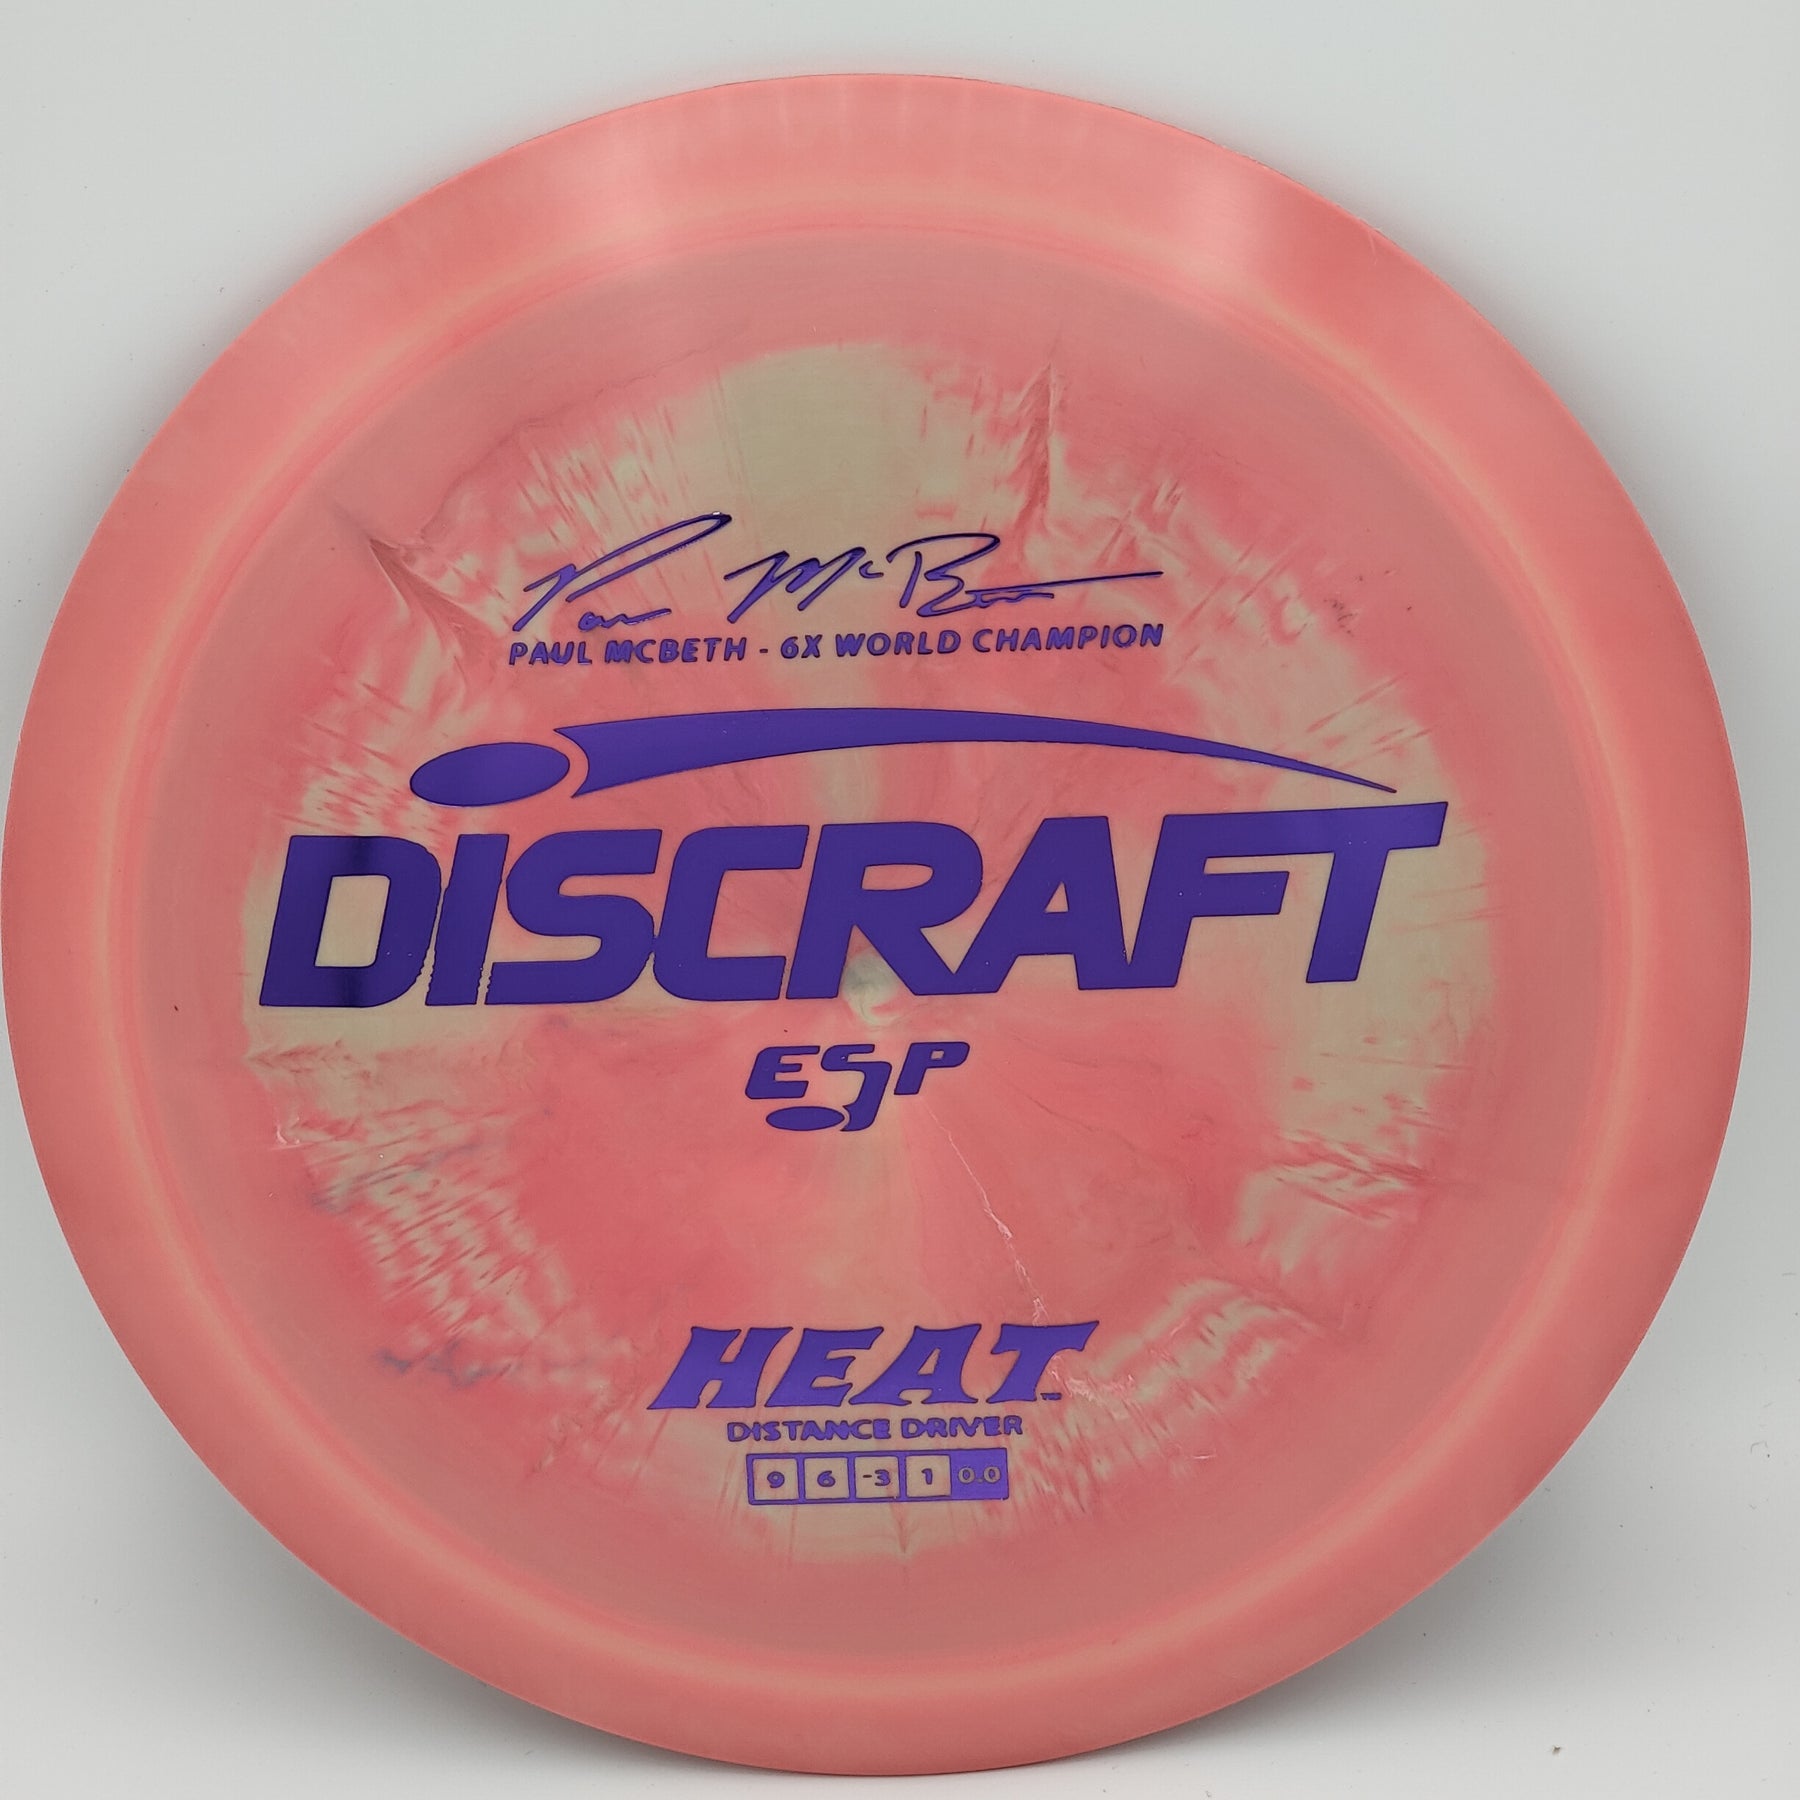 Discraft Heat - ESP Paul McBeth 6x World Champion